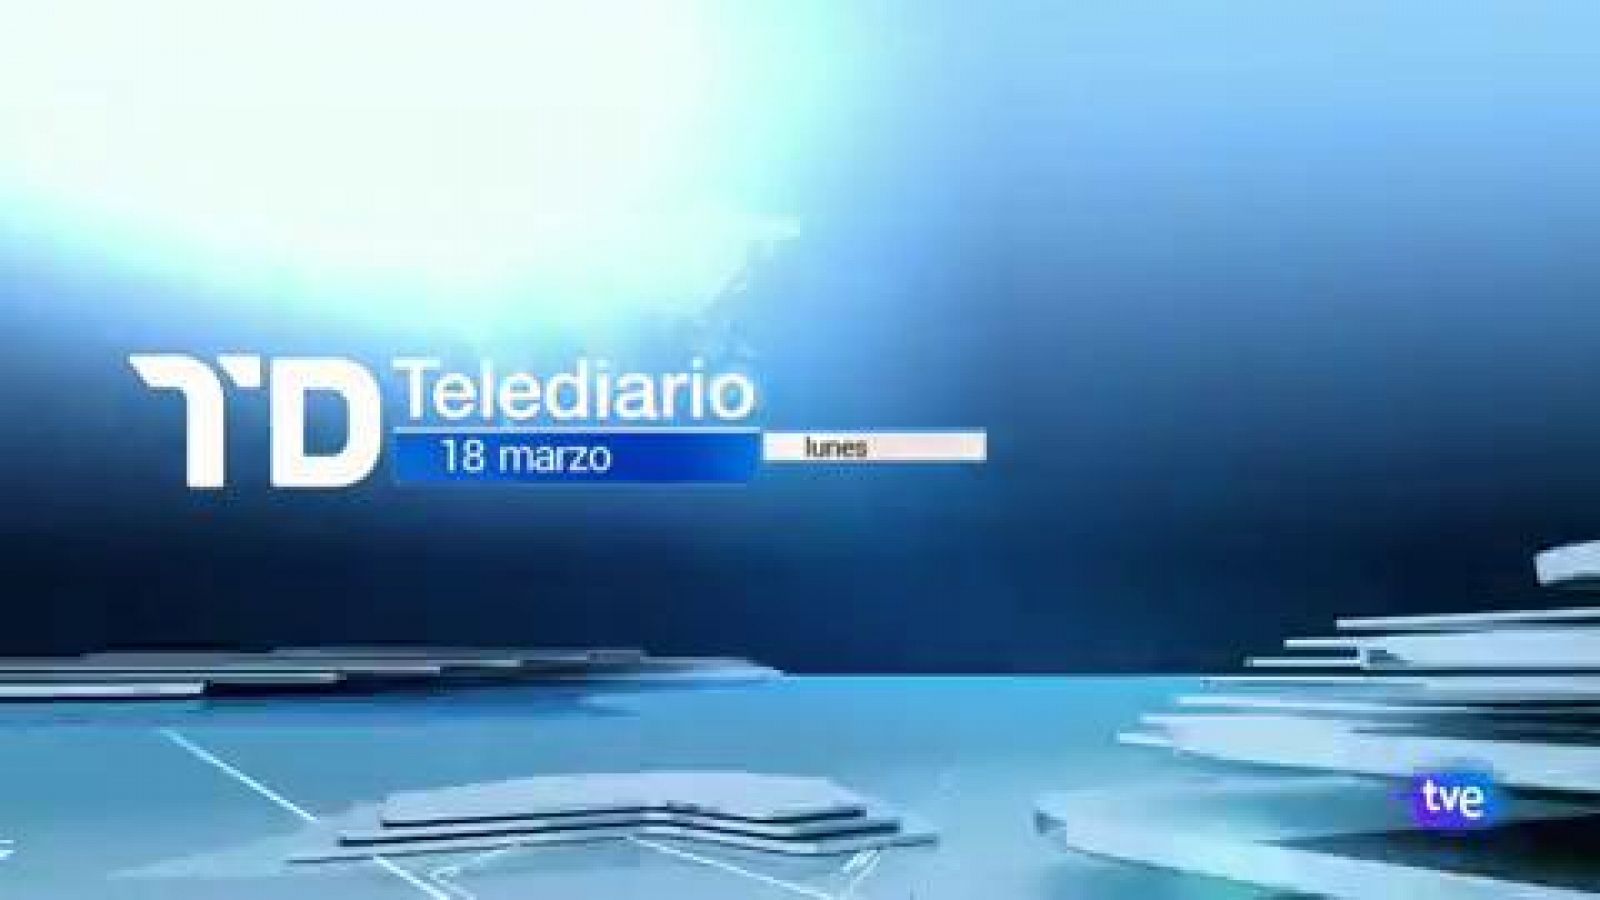 Telediario 1: Telediario 2 en 4' - 18/03/19 | RTVE Play